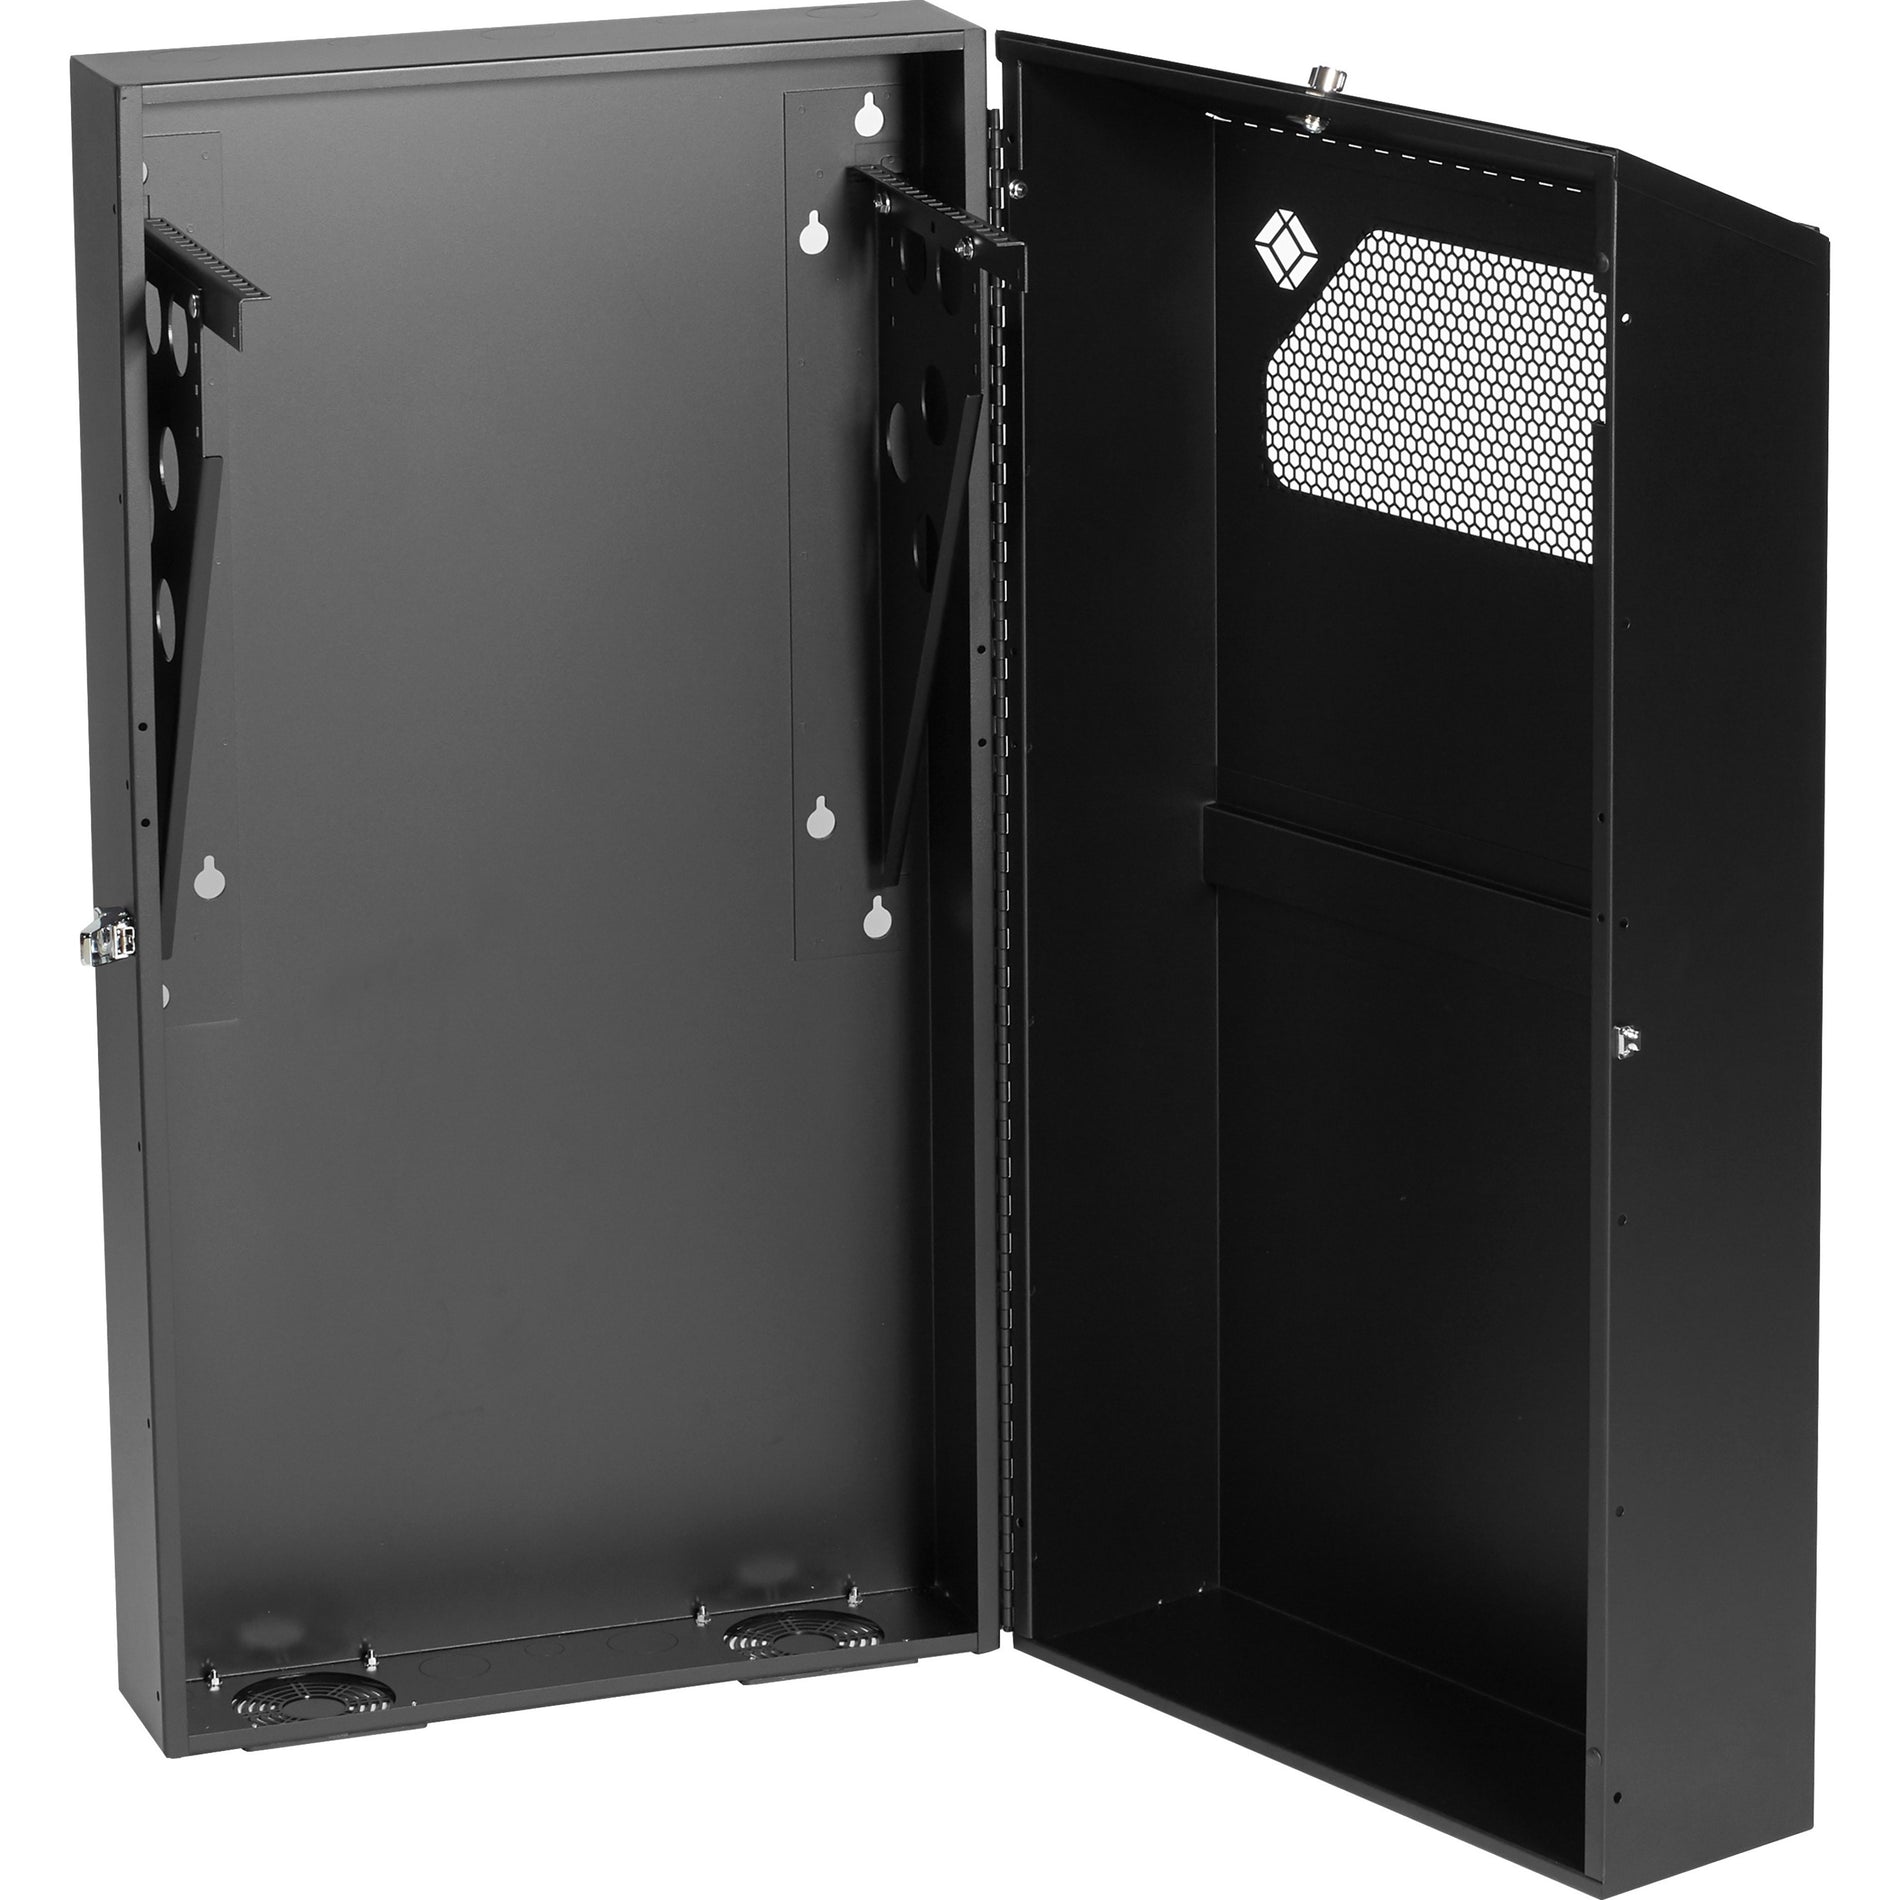 Black Box RMT353LA Low-Profile Vertical Wallmount Cabinet - 6U, 36"D Equipment, TAA Compliant, 1 Year Warranty